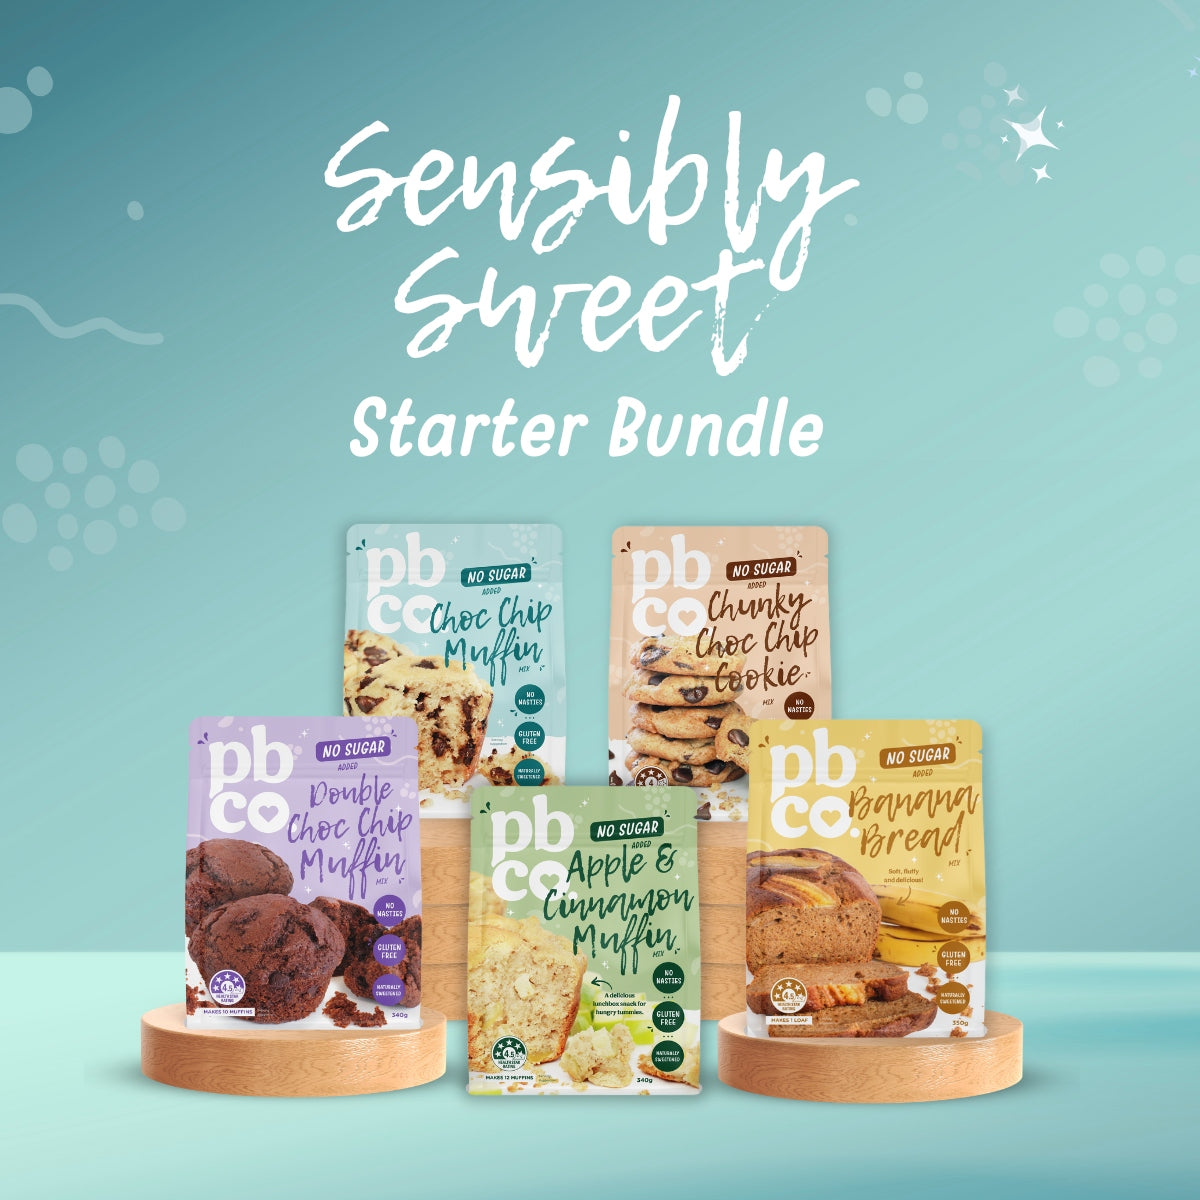 Sensibly Sweet Starter Bundle - Low carb & sugar free  - Just $41.82! Shop now at PBCo.